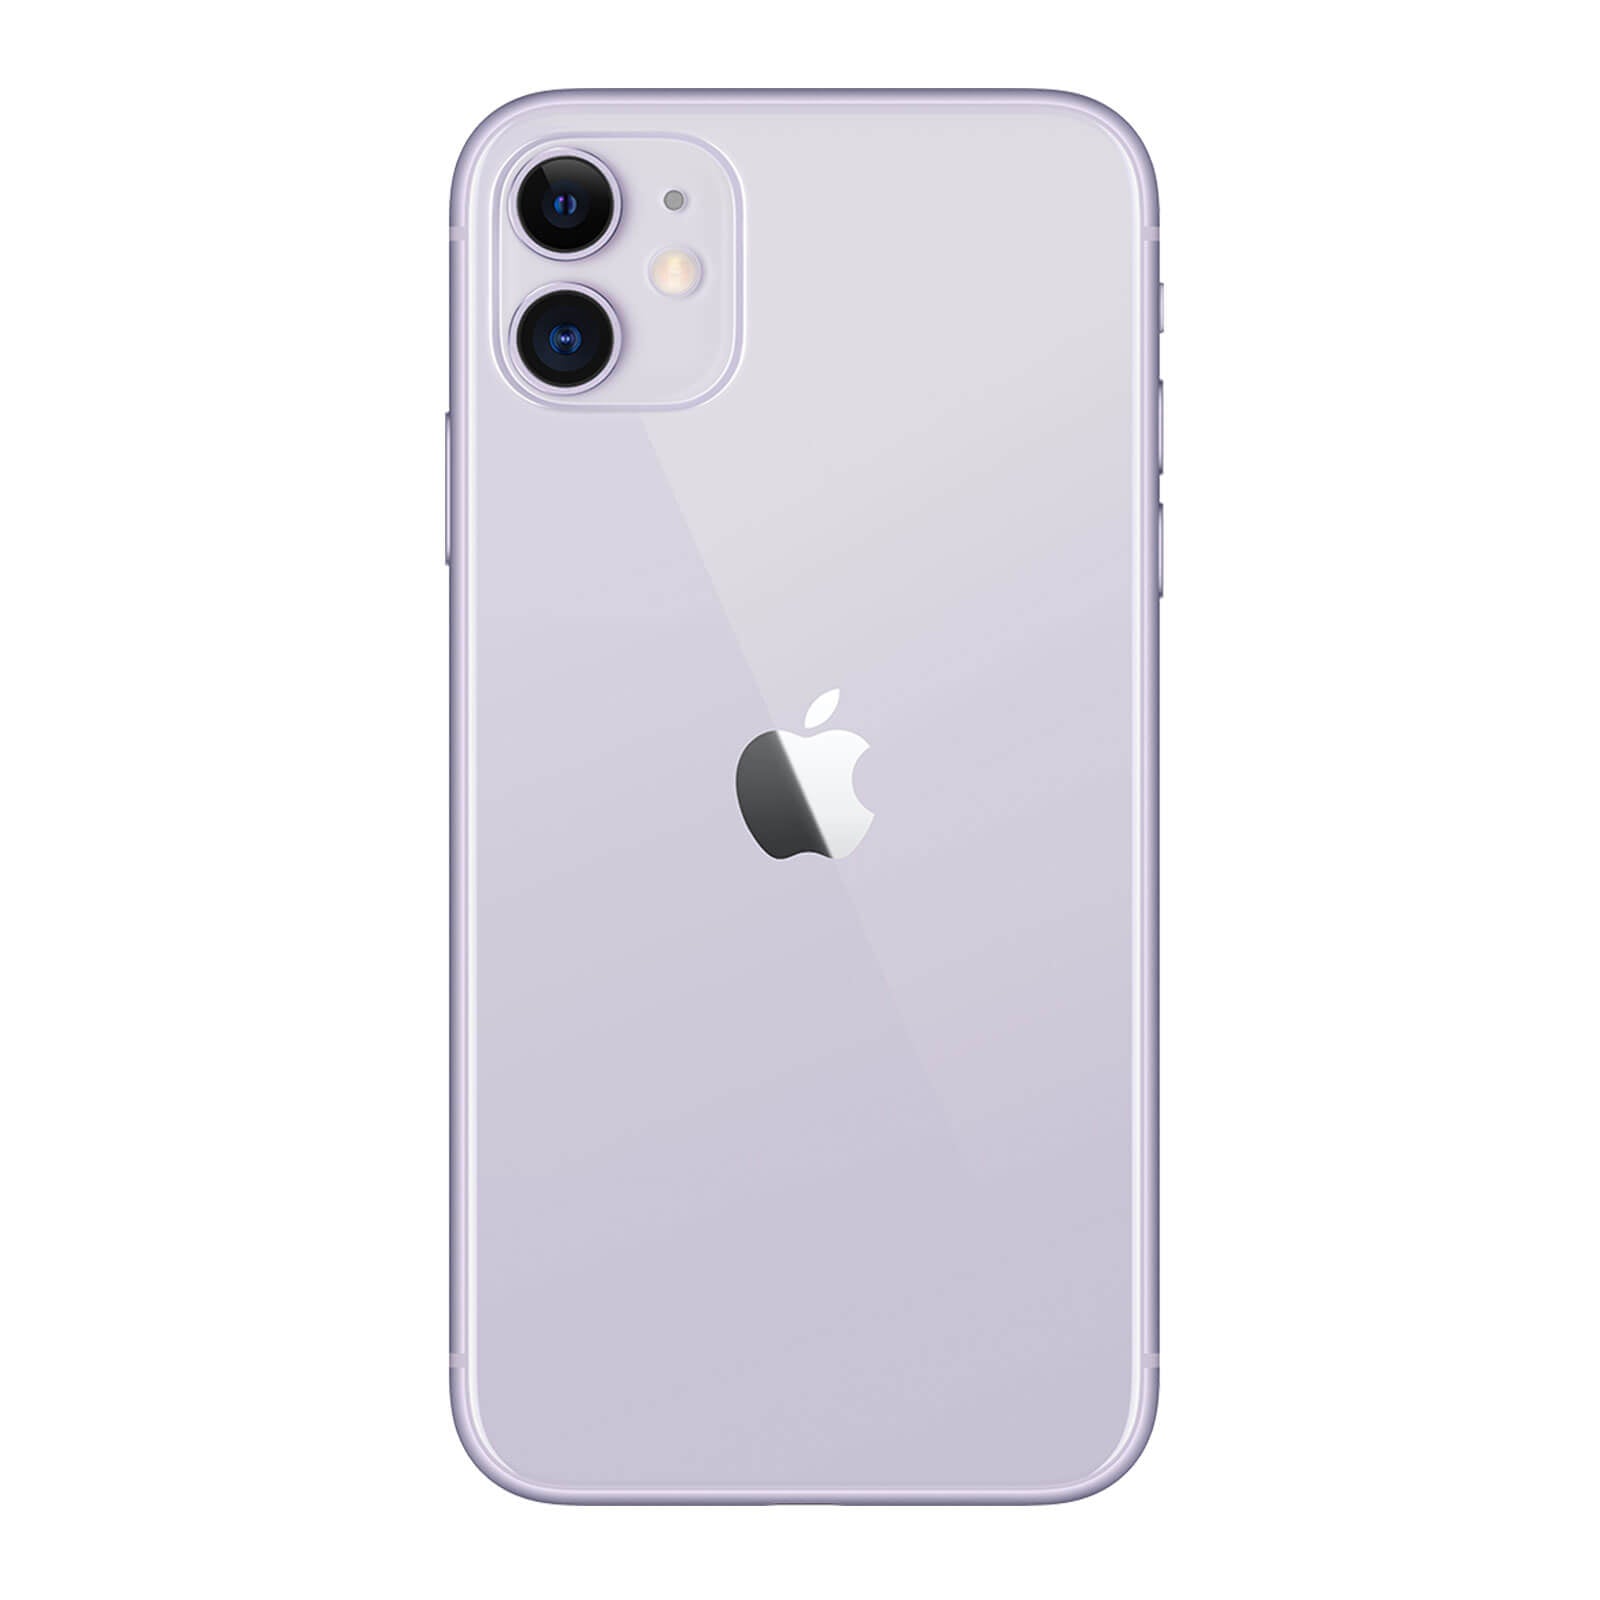 Apple iPhone 11 256GB Purple Good - AT&T